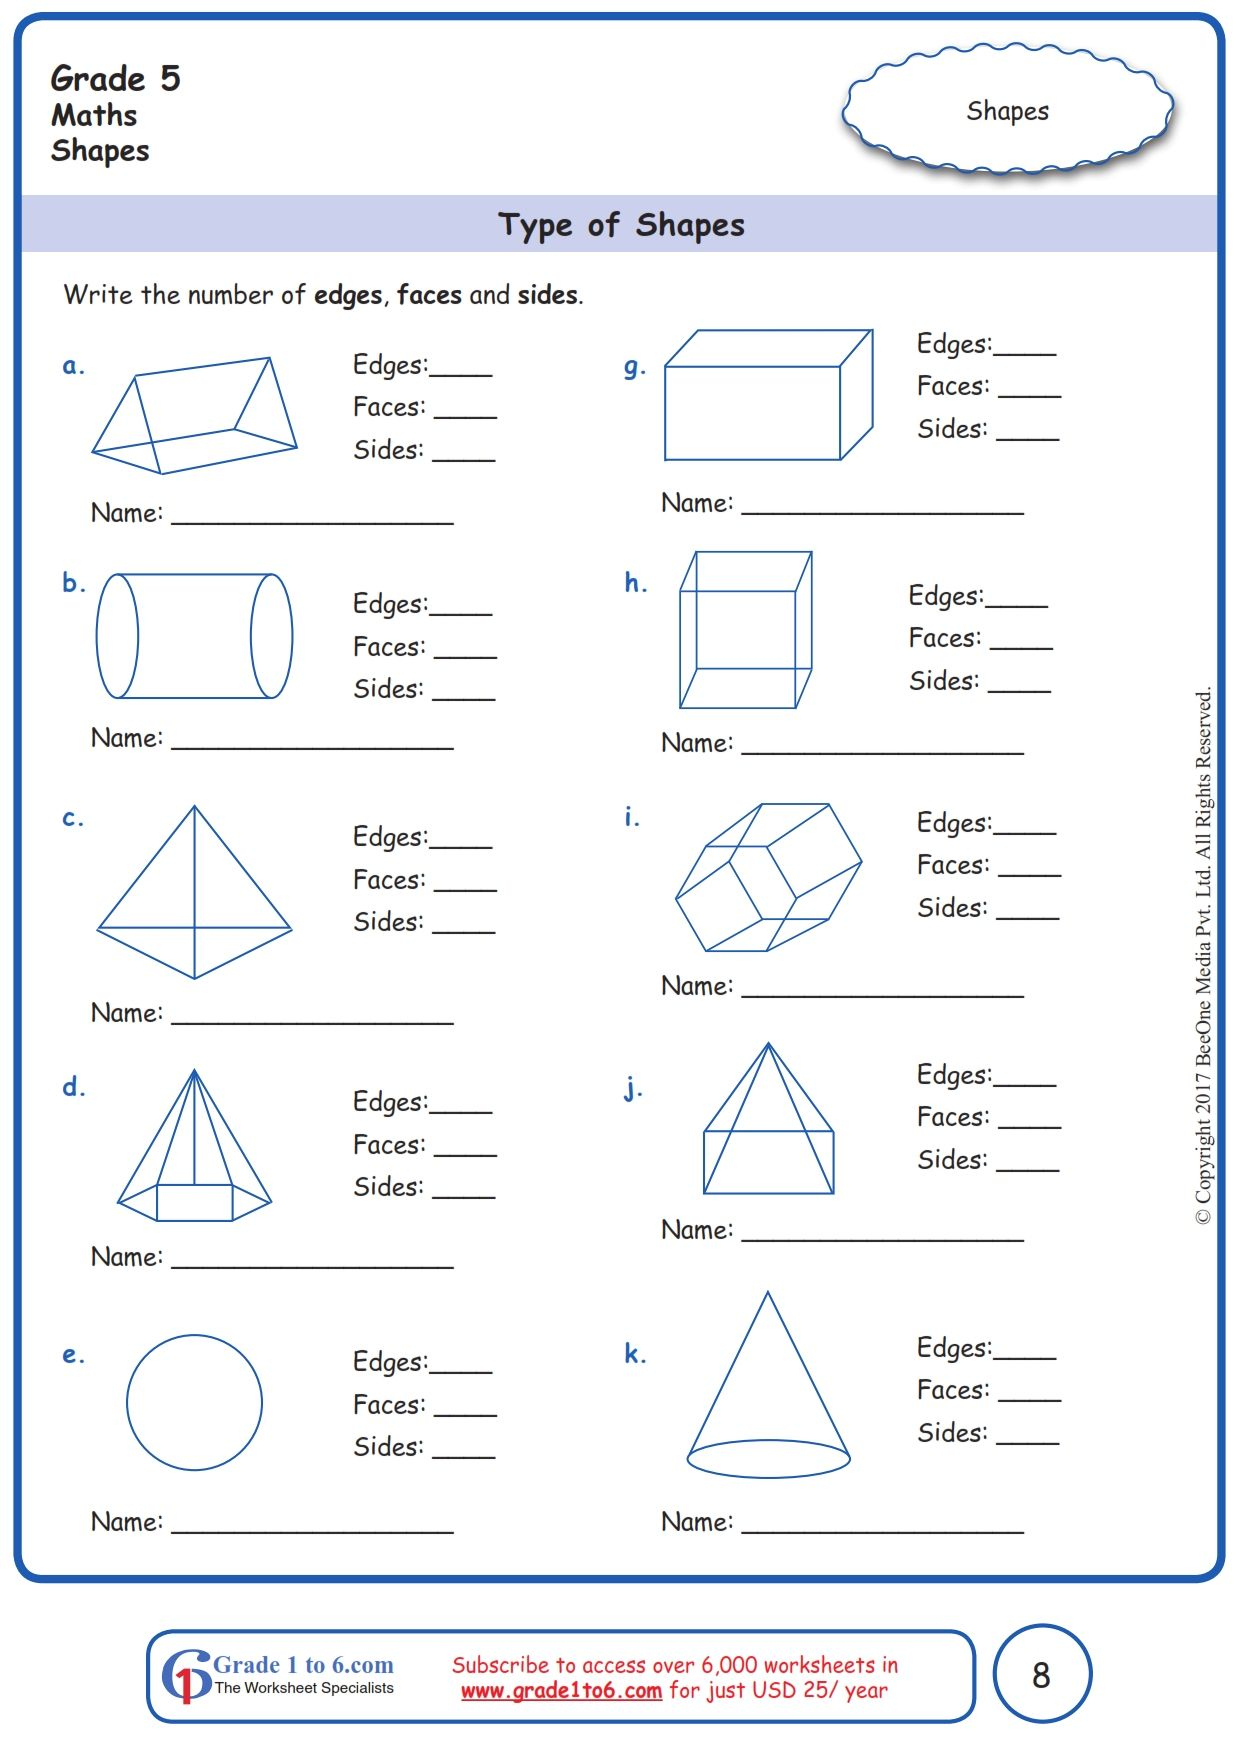 Worksheet Grade 5 Math Type Of Shapes | Mathematics Worksheets - Free Printable Math Worksheets For Grade 5 Geometry